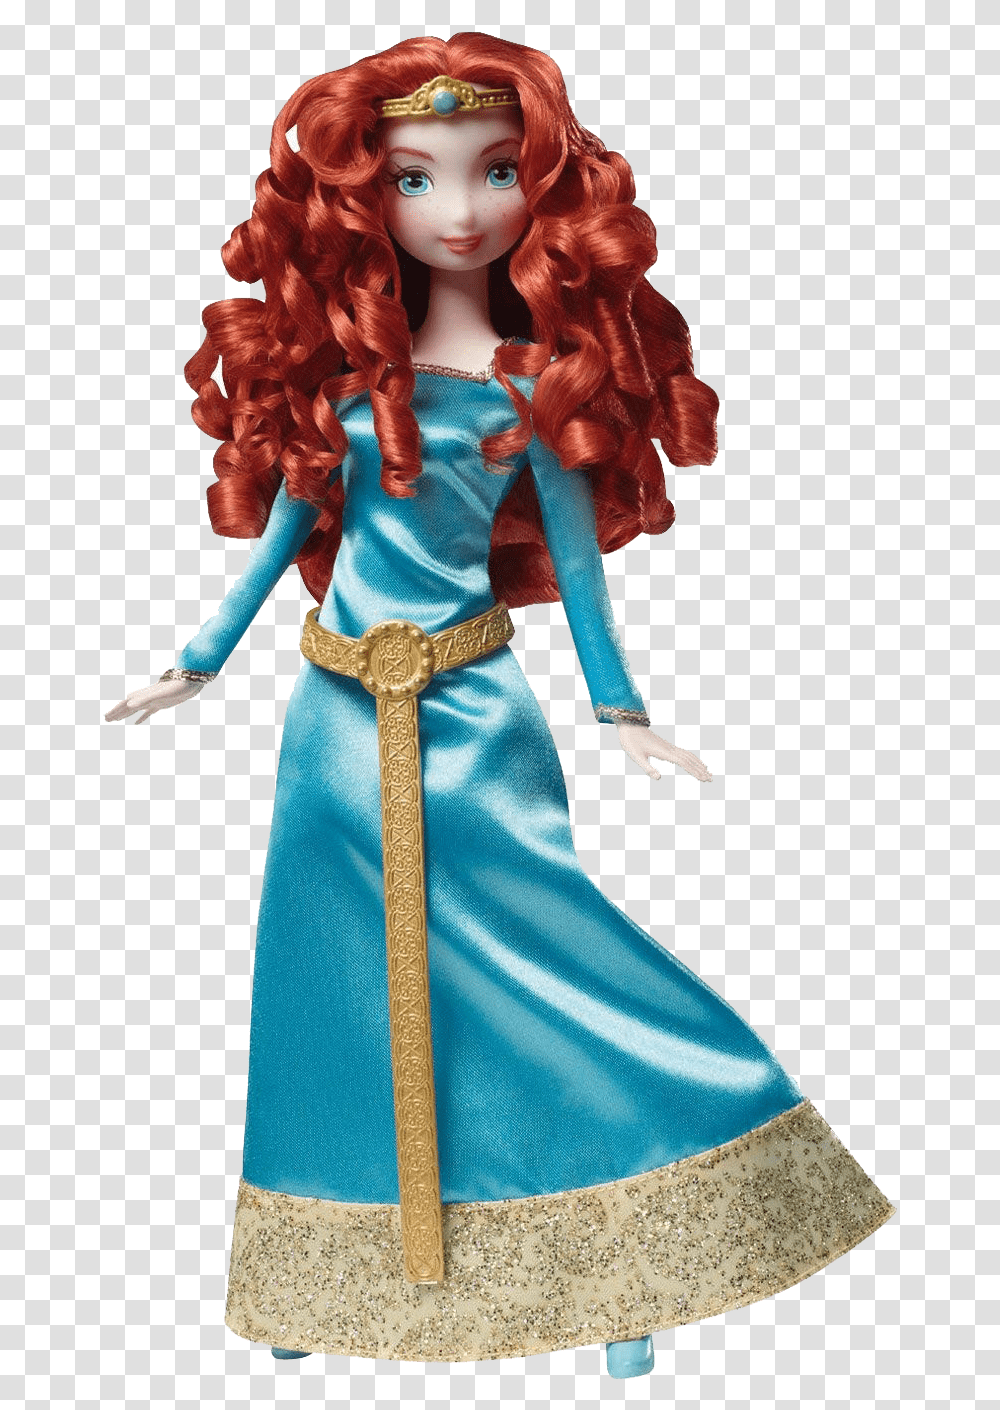 Merida Free Image Download Disney Princess Merida Doll, Toy, Barbie, Figurine, Person Transparent Png